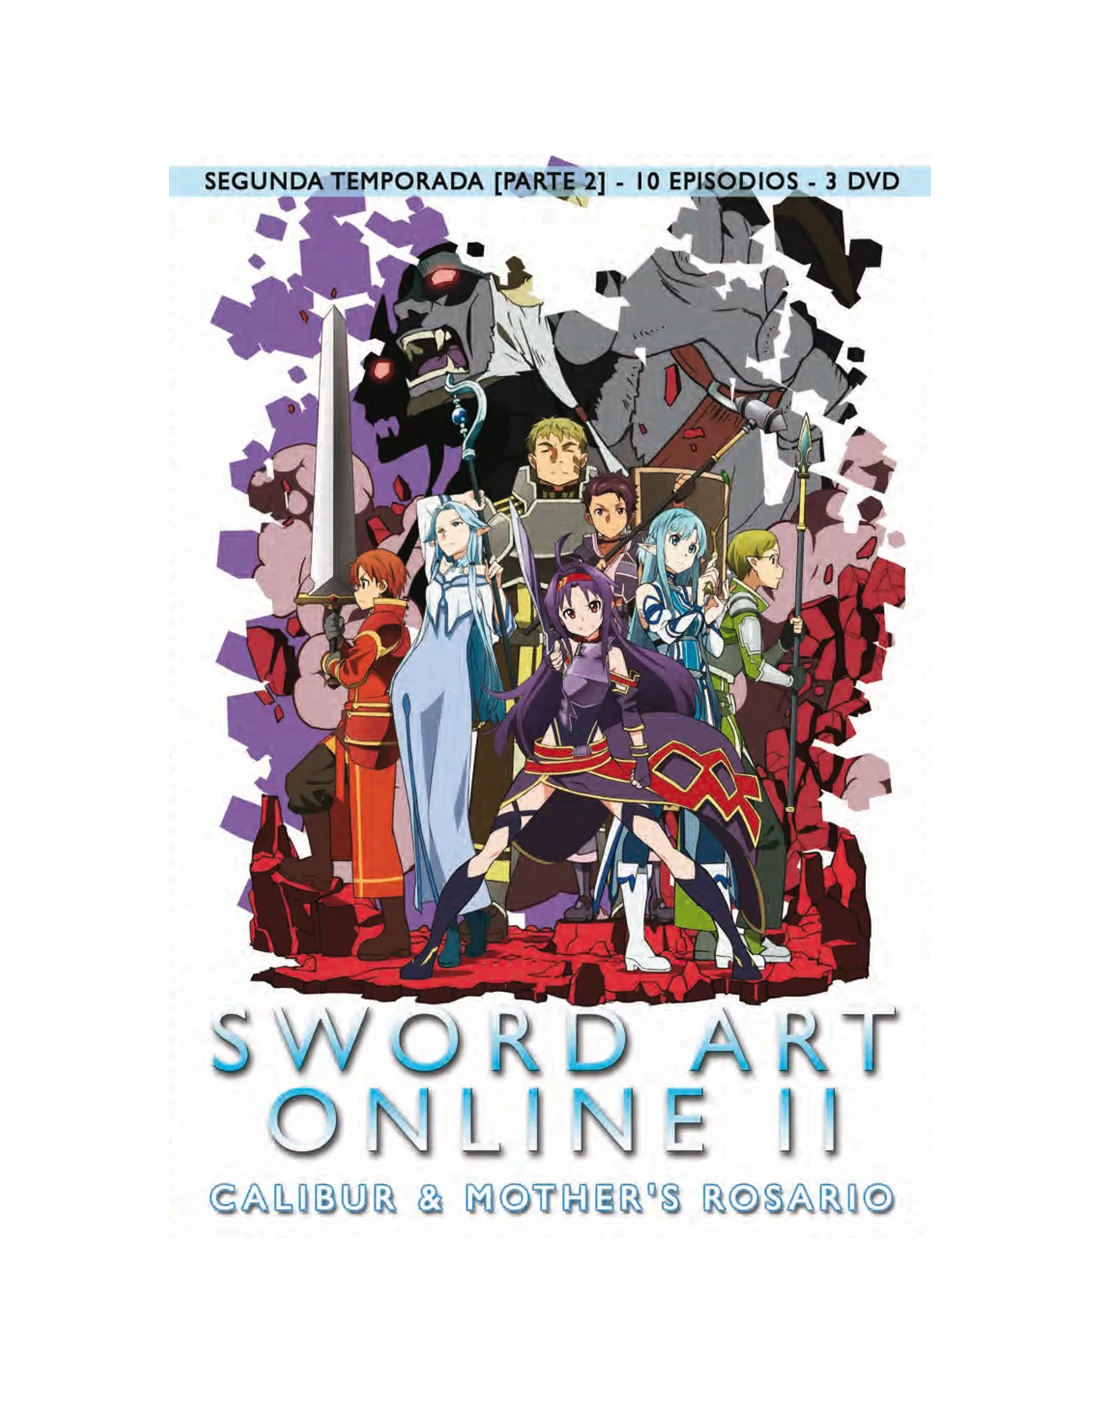 Sword Art Online Temporada 2 - assista episódios online streaming